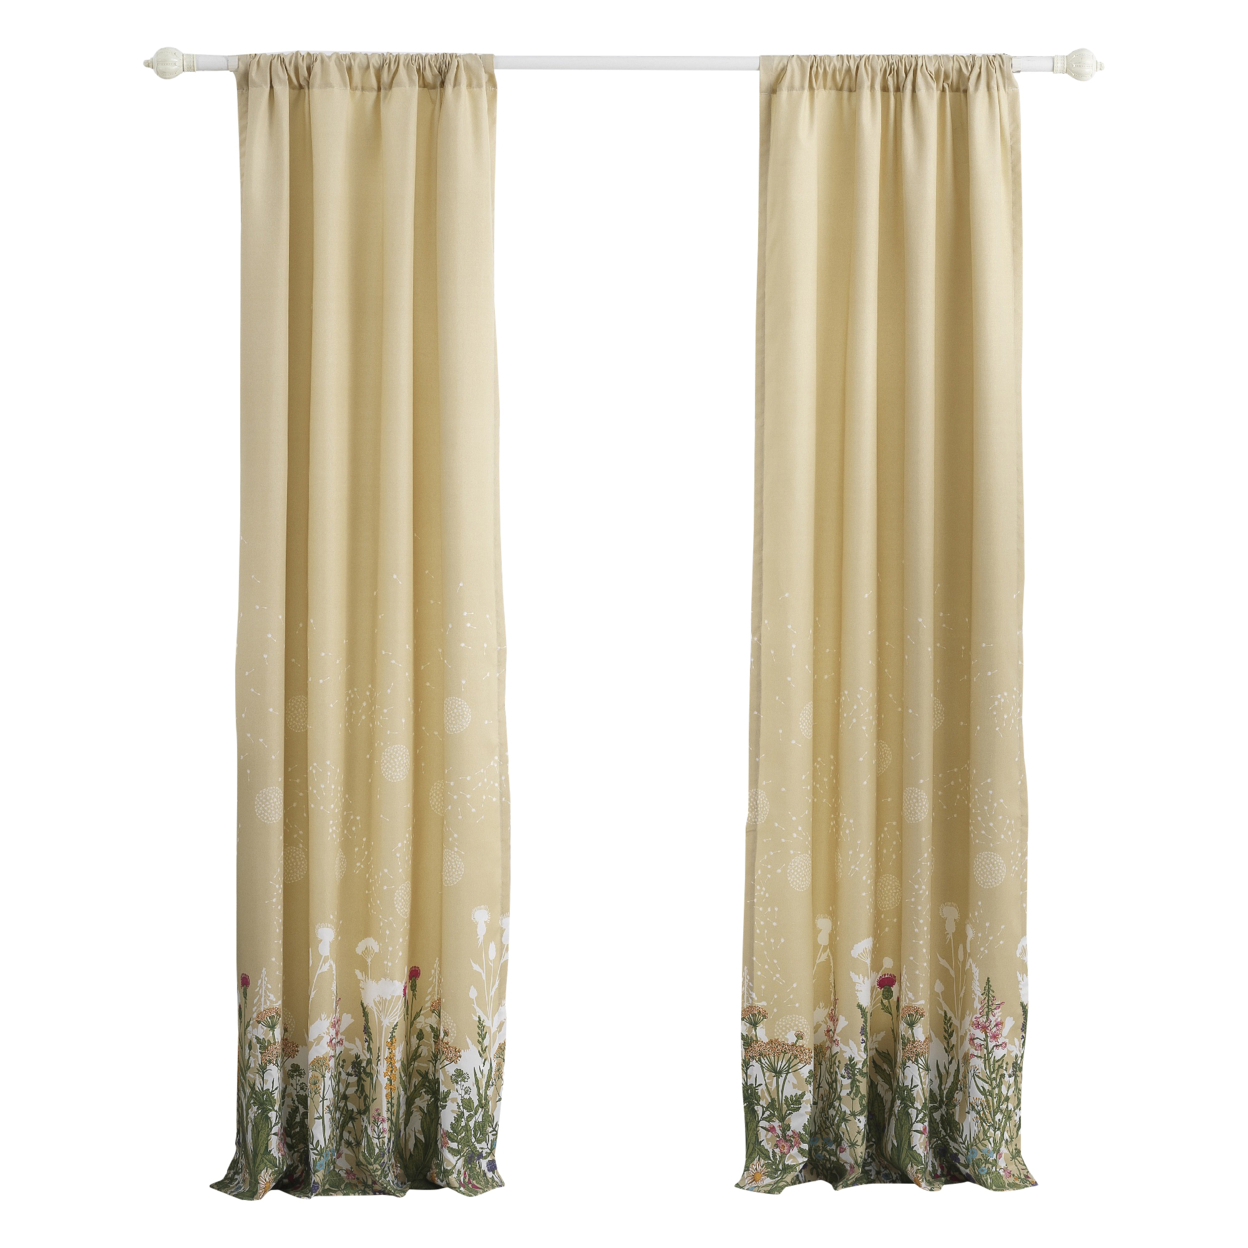 84 Inch Window Curtains, Beige Microfiber Fabric, Wildflower Print Design